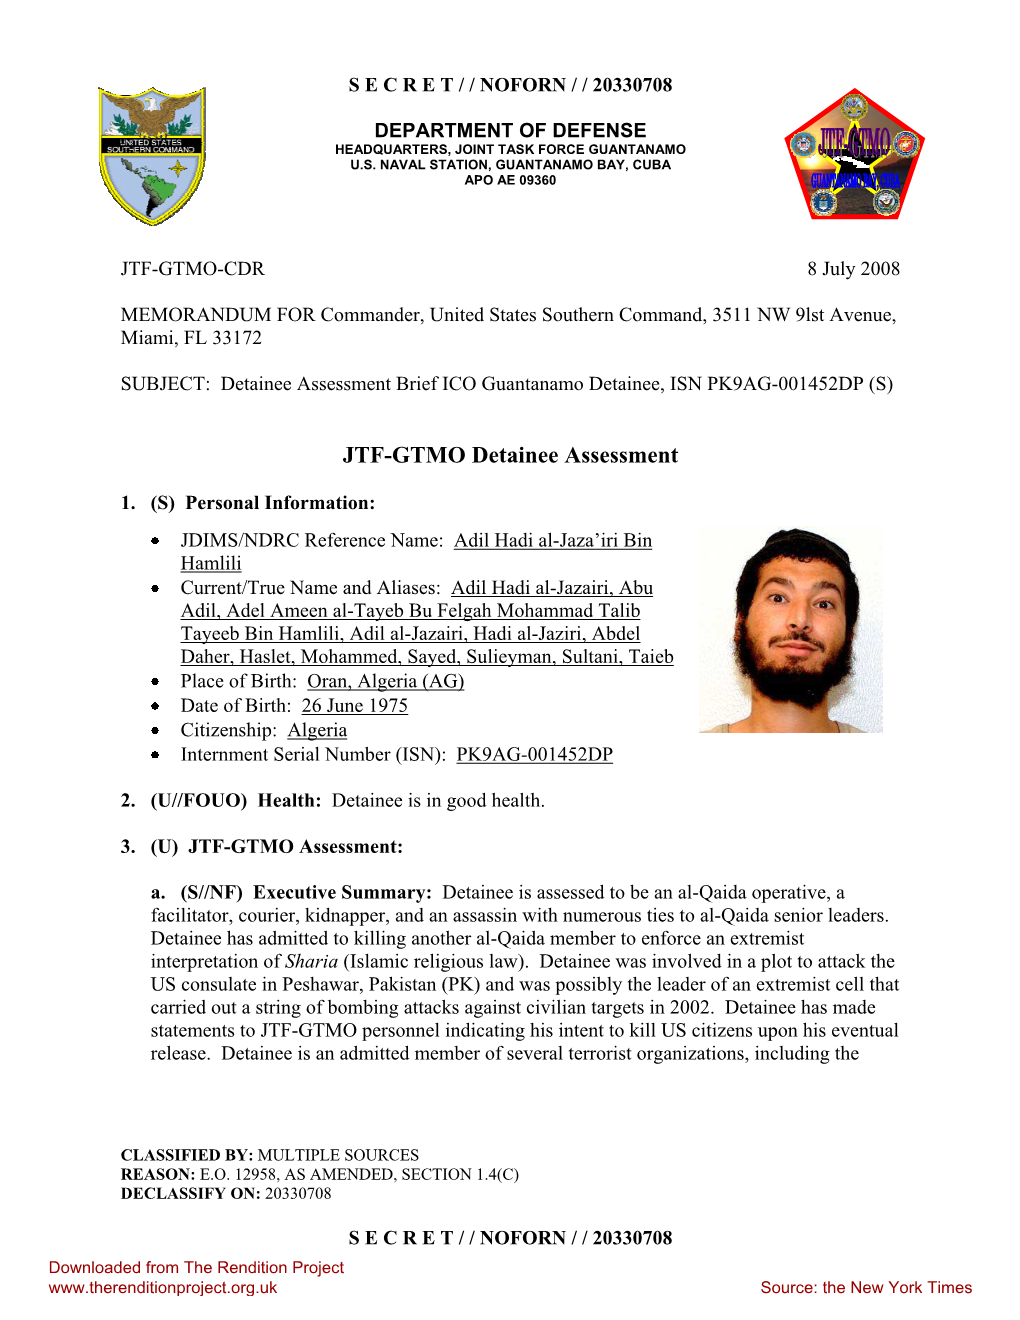 Detainee Assessment Brief ICO Guantanamo Detainee, ISN PK9AG-001452DP (S)